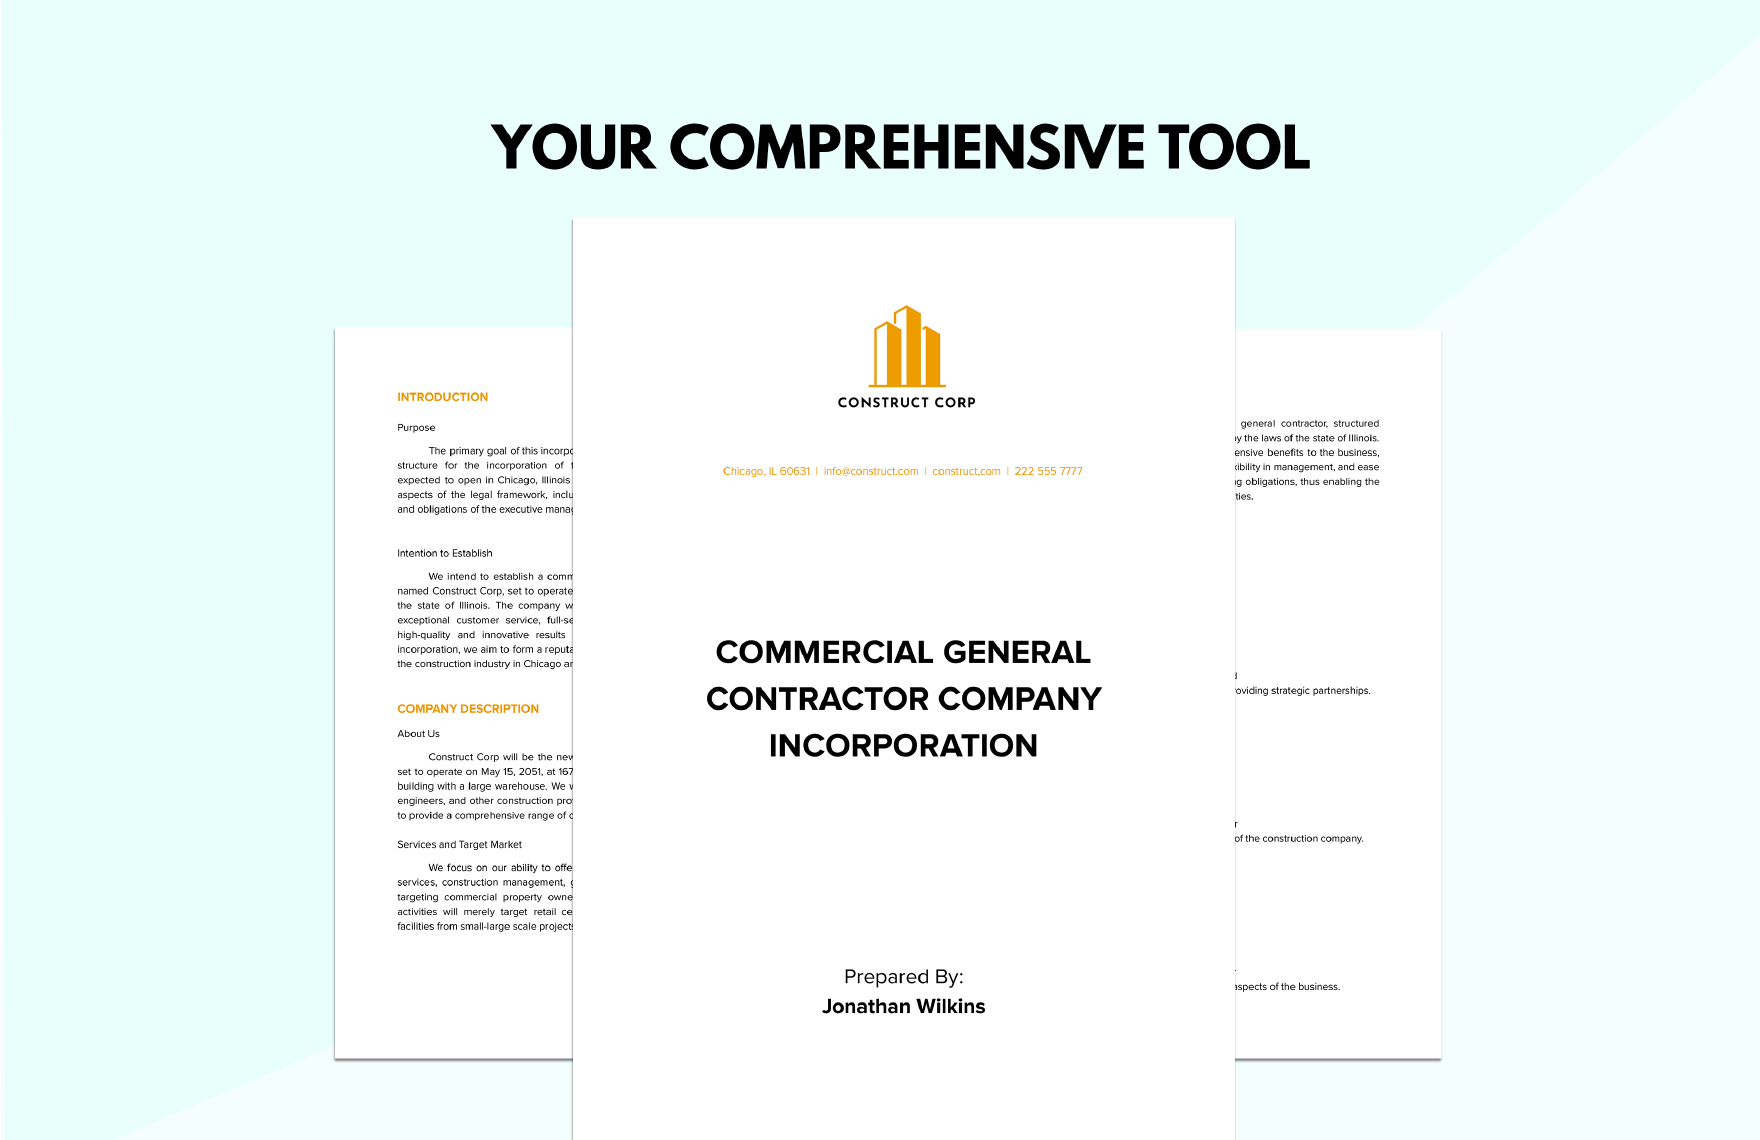 Commercial General Contractors Incorporation